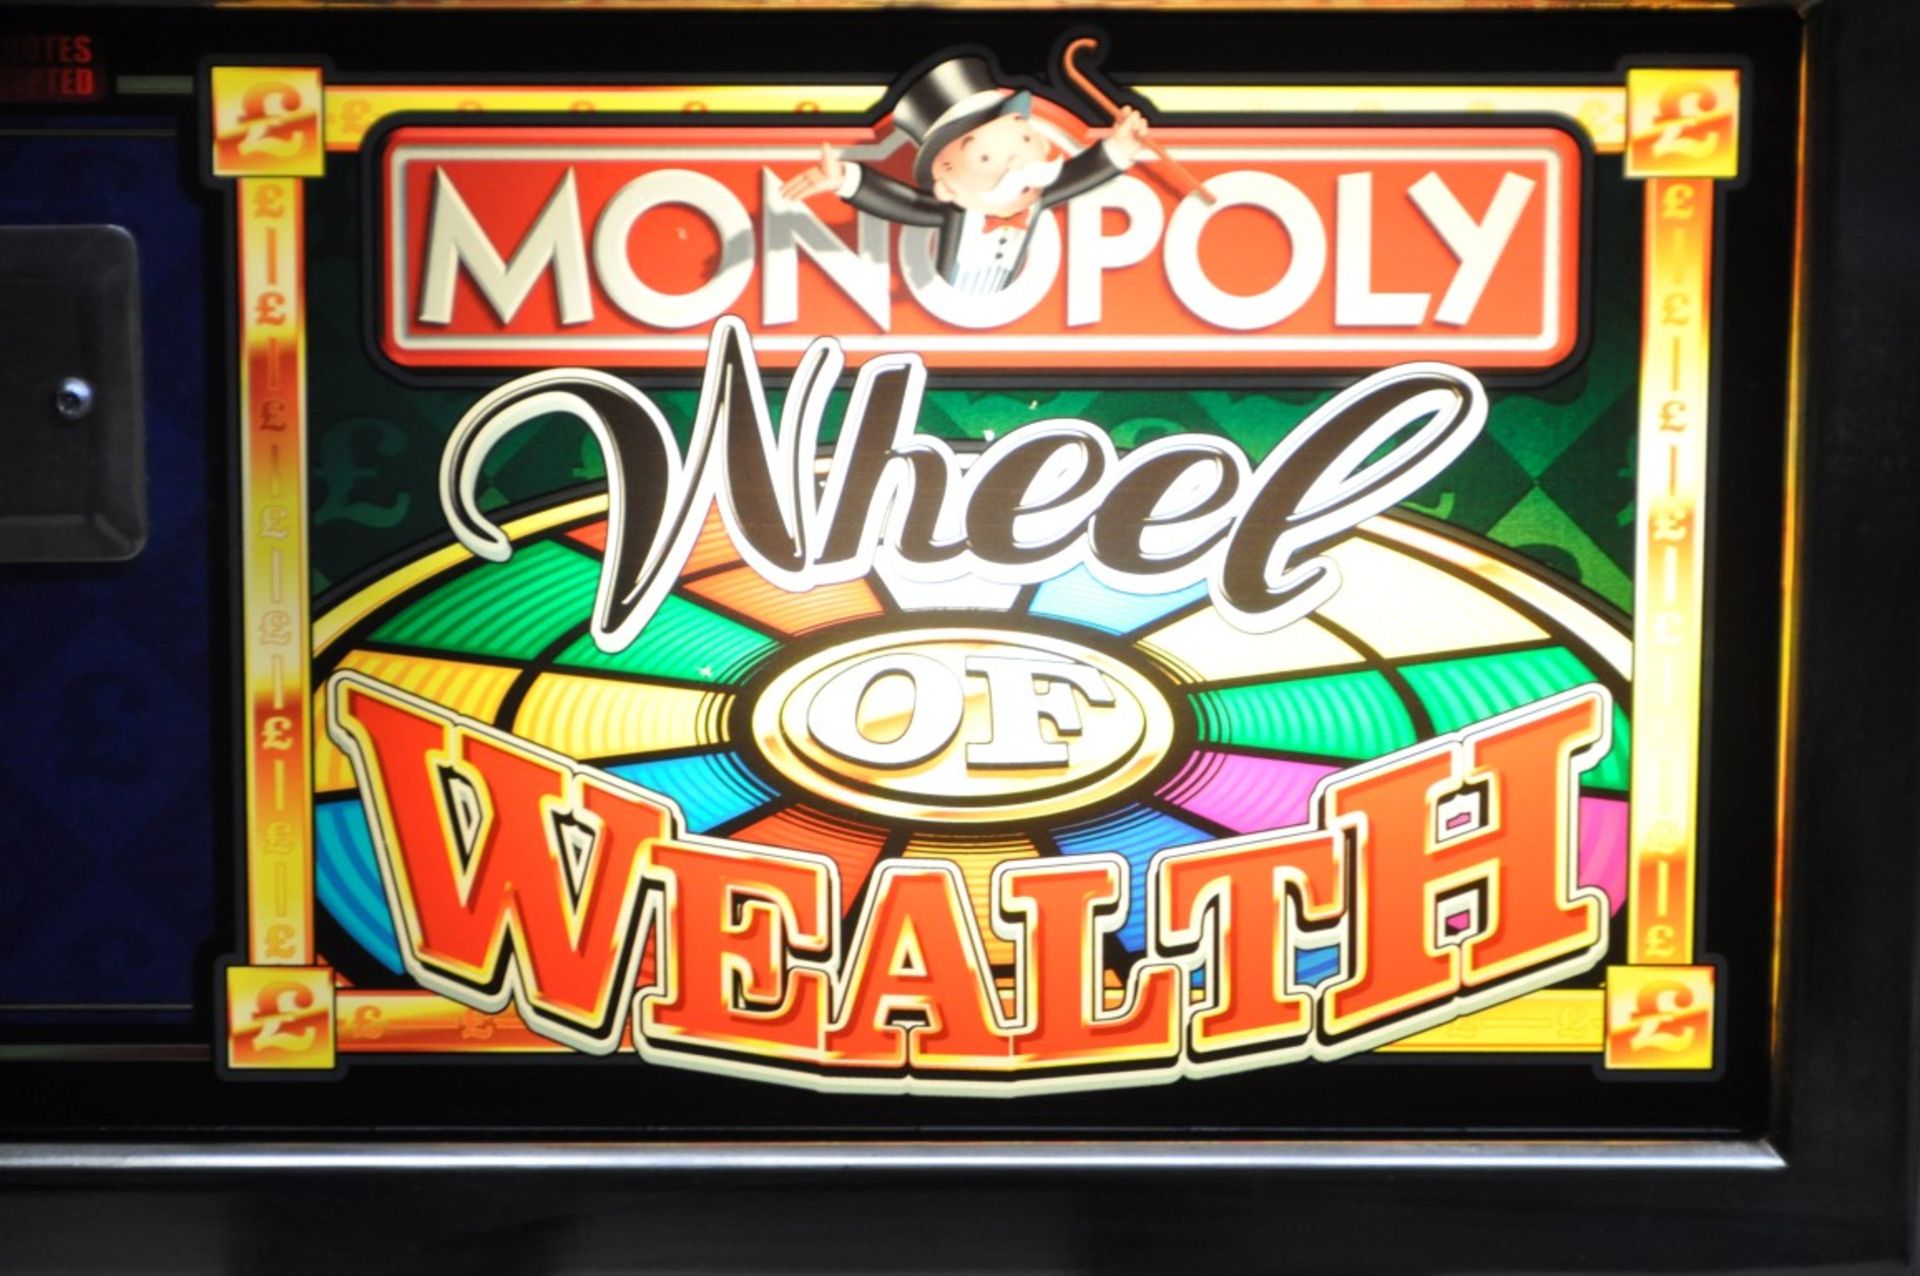 1 x "MONOPOLY: Wheel Of Wealth" Digital Arcade Fruit Machine - Manufacturer: Mozuma Games (2007) - - Image 2 of 3